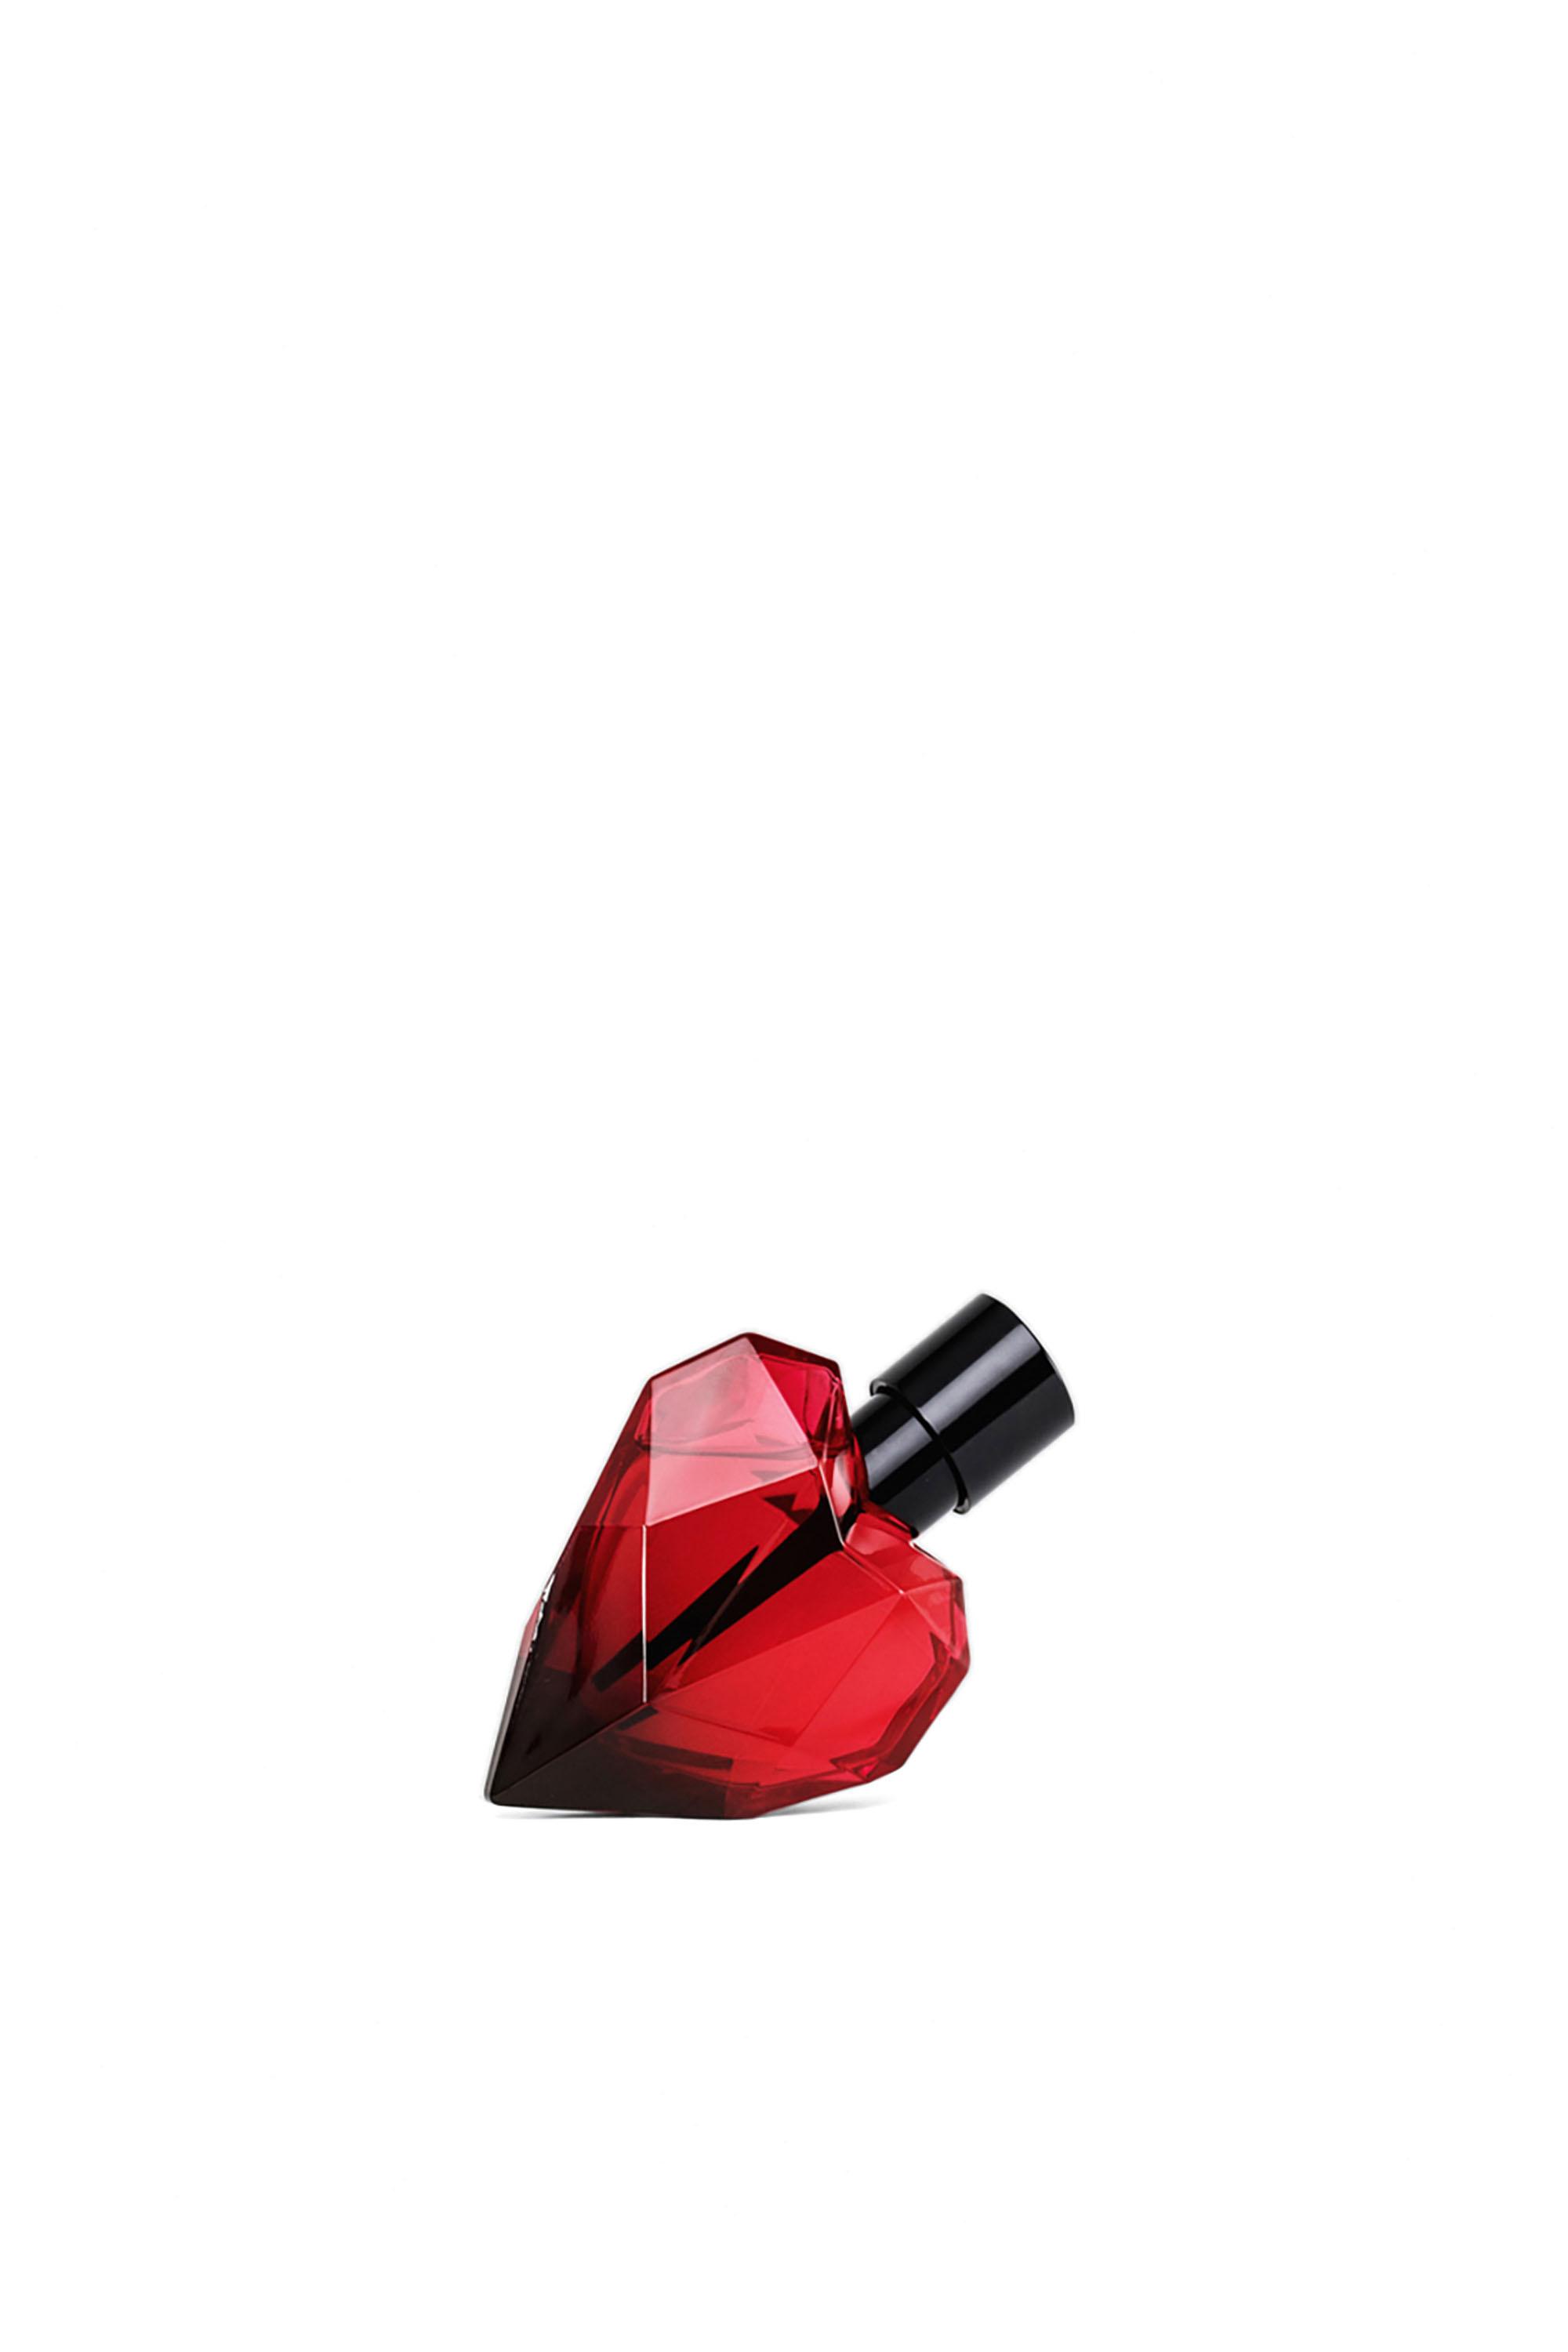 Diesel - LOVERDOSE RED KISS EAU DE PARFUM 30ML, Rot - Image 1